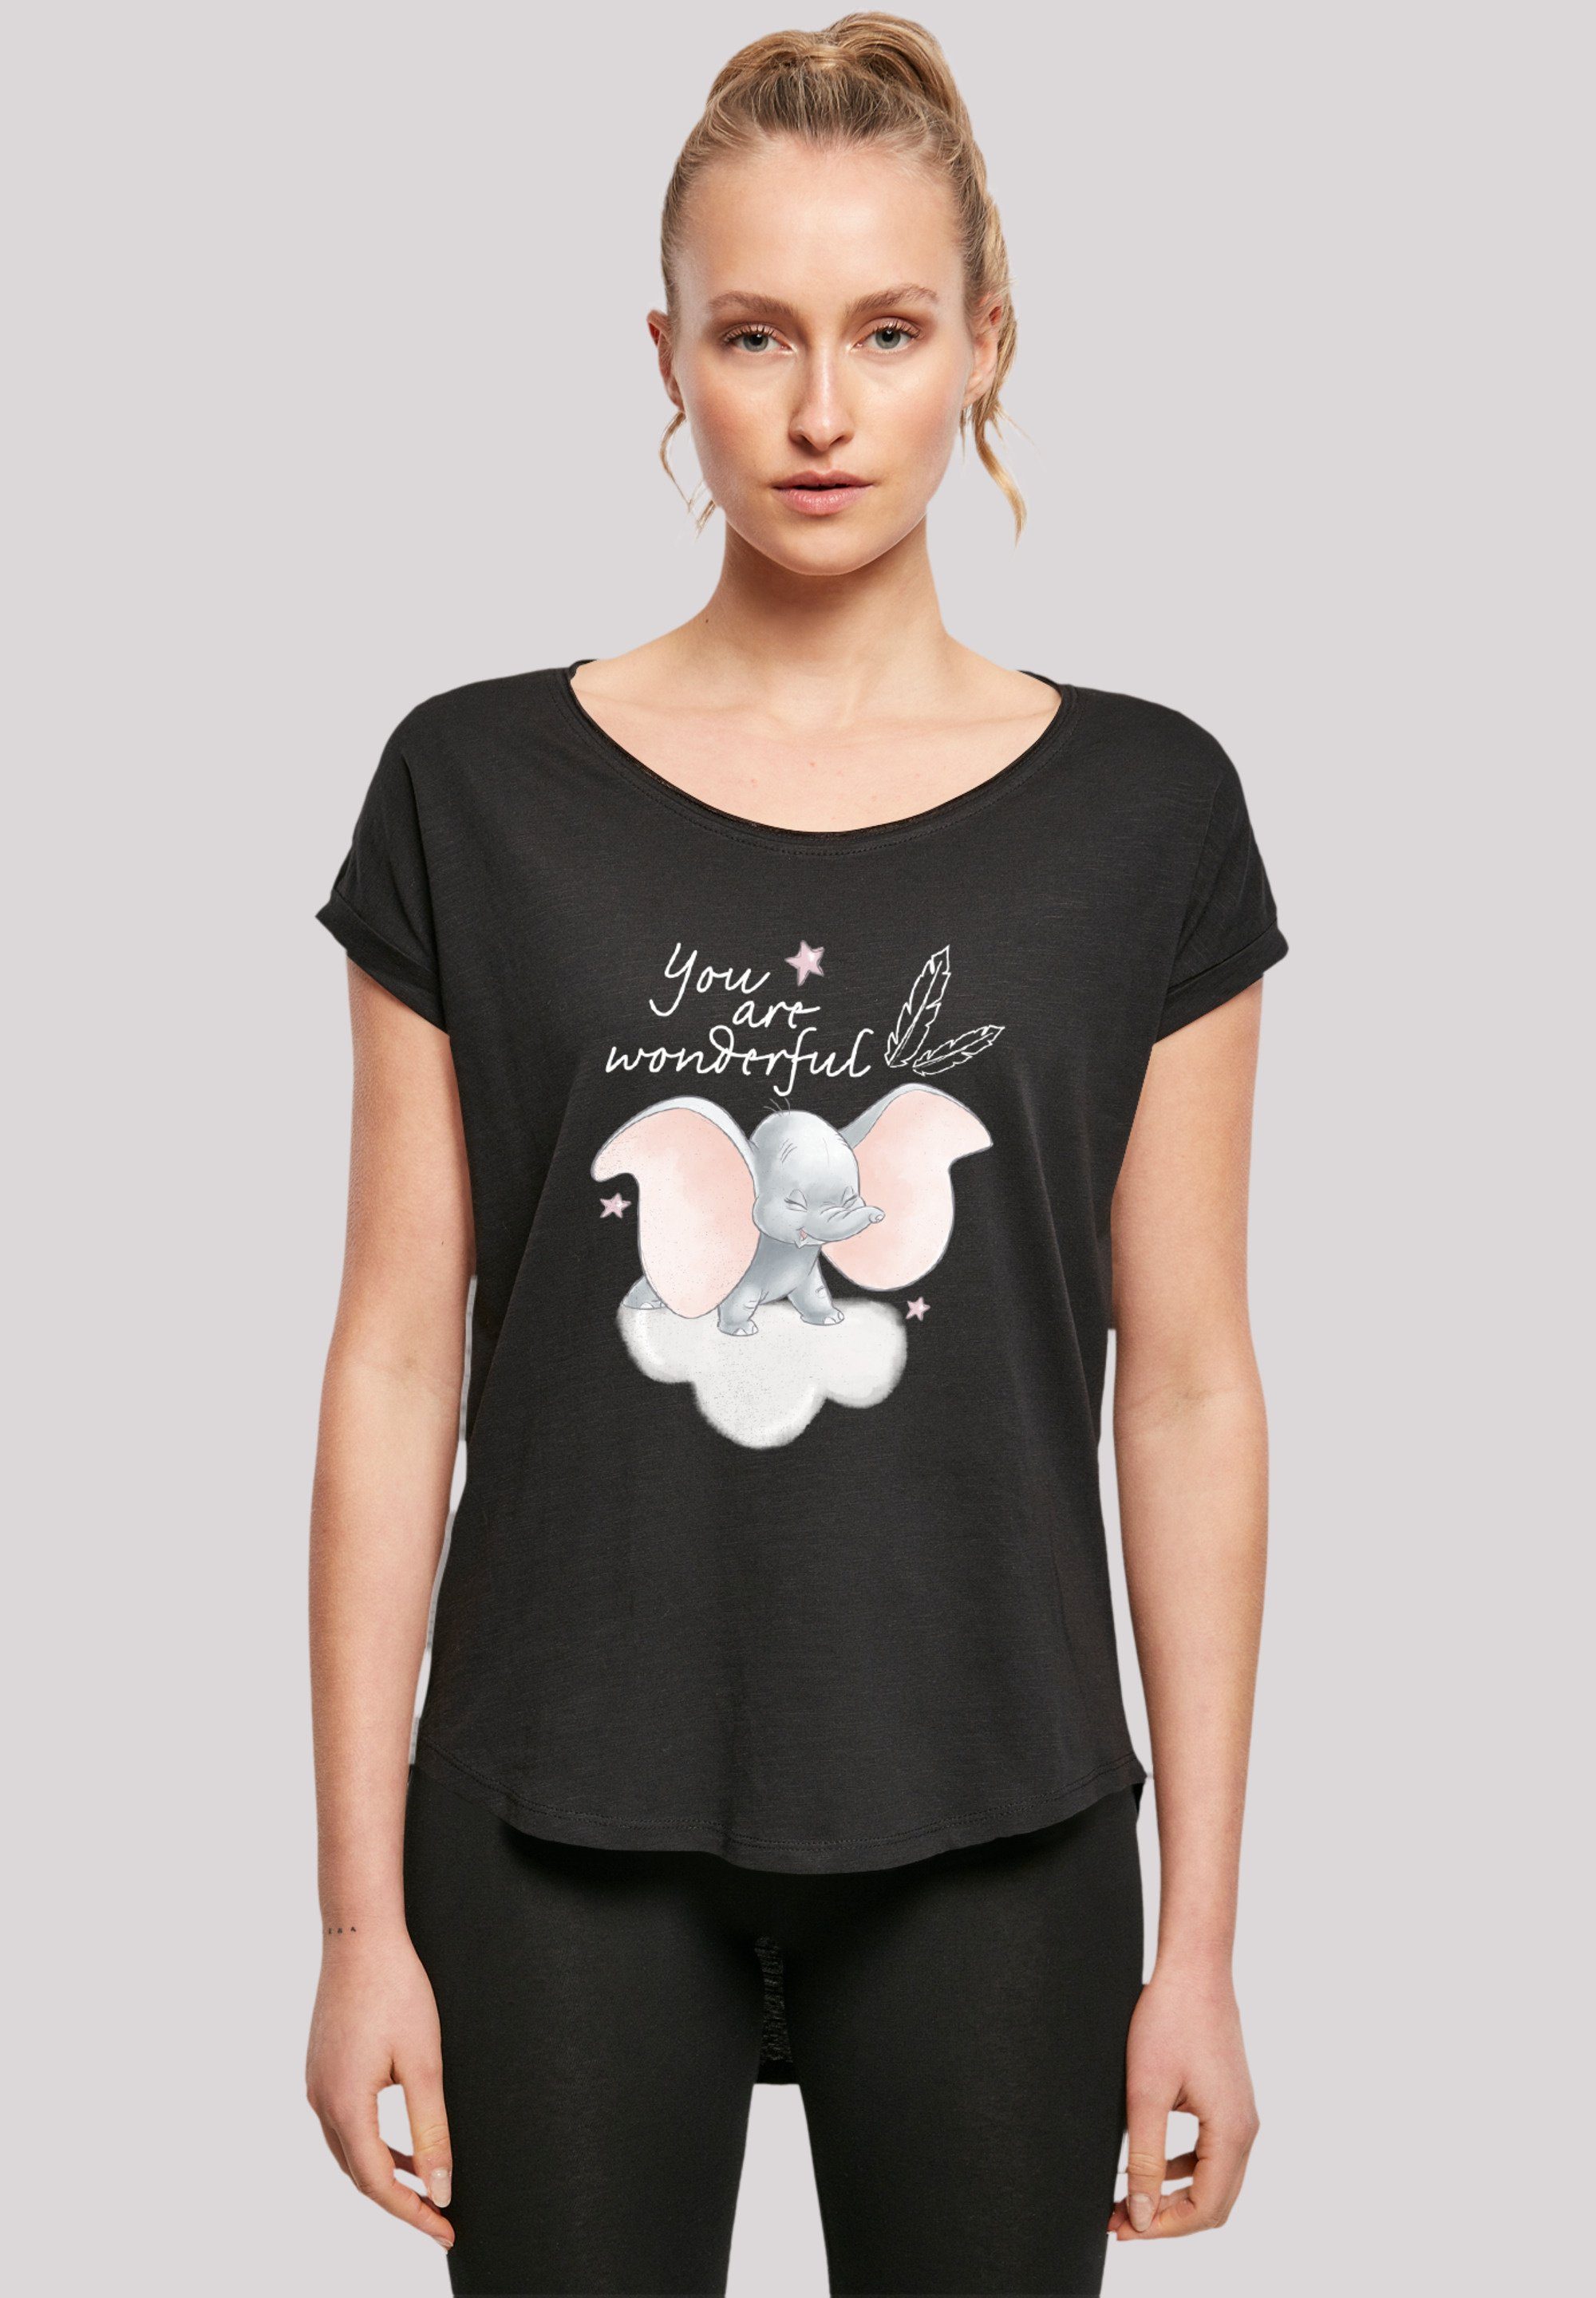 F4NT4STIC T-Shirt Disney Dumbo You Are Wonderful Premium Qualität